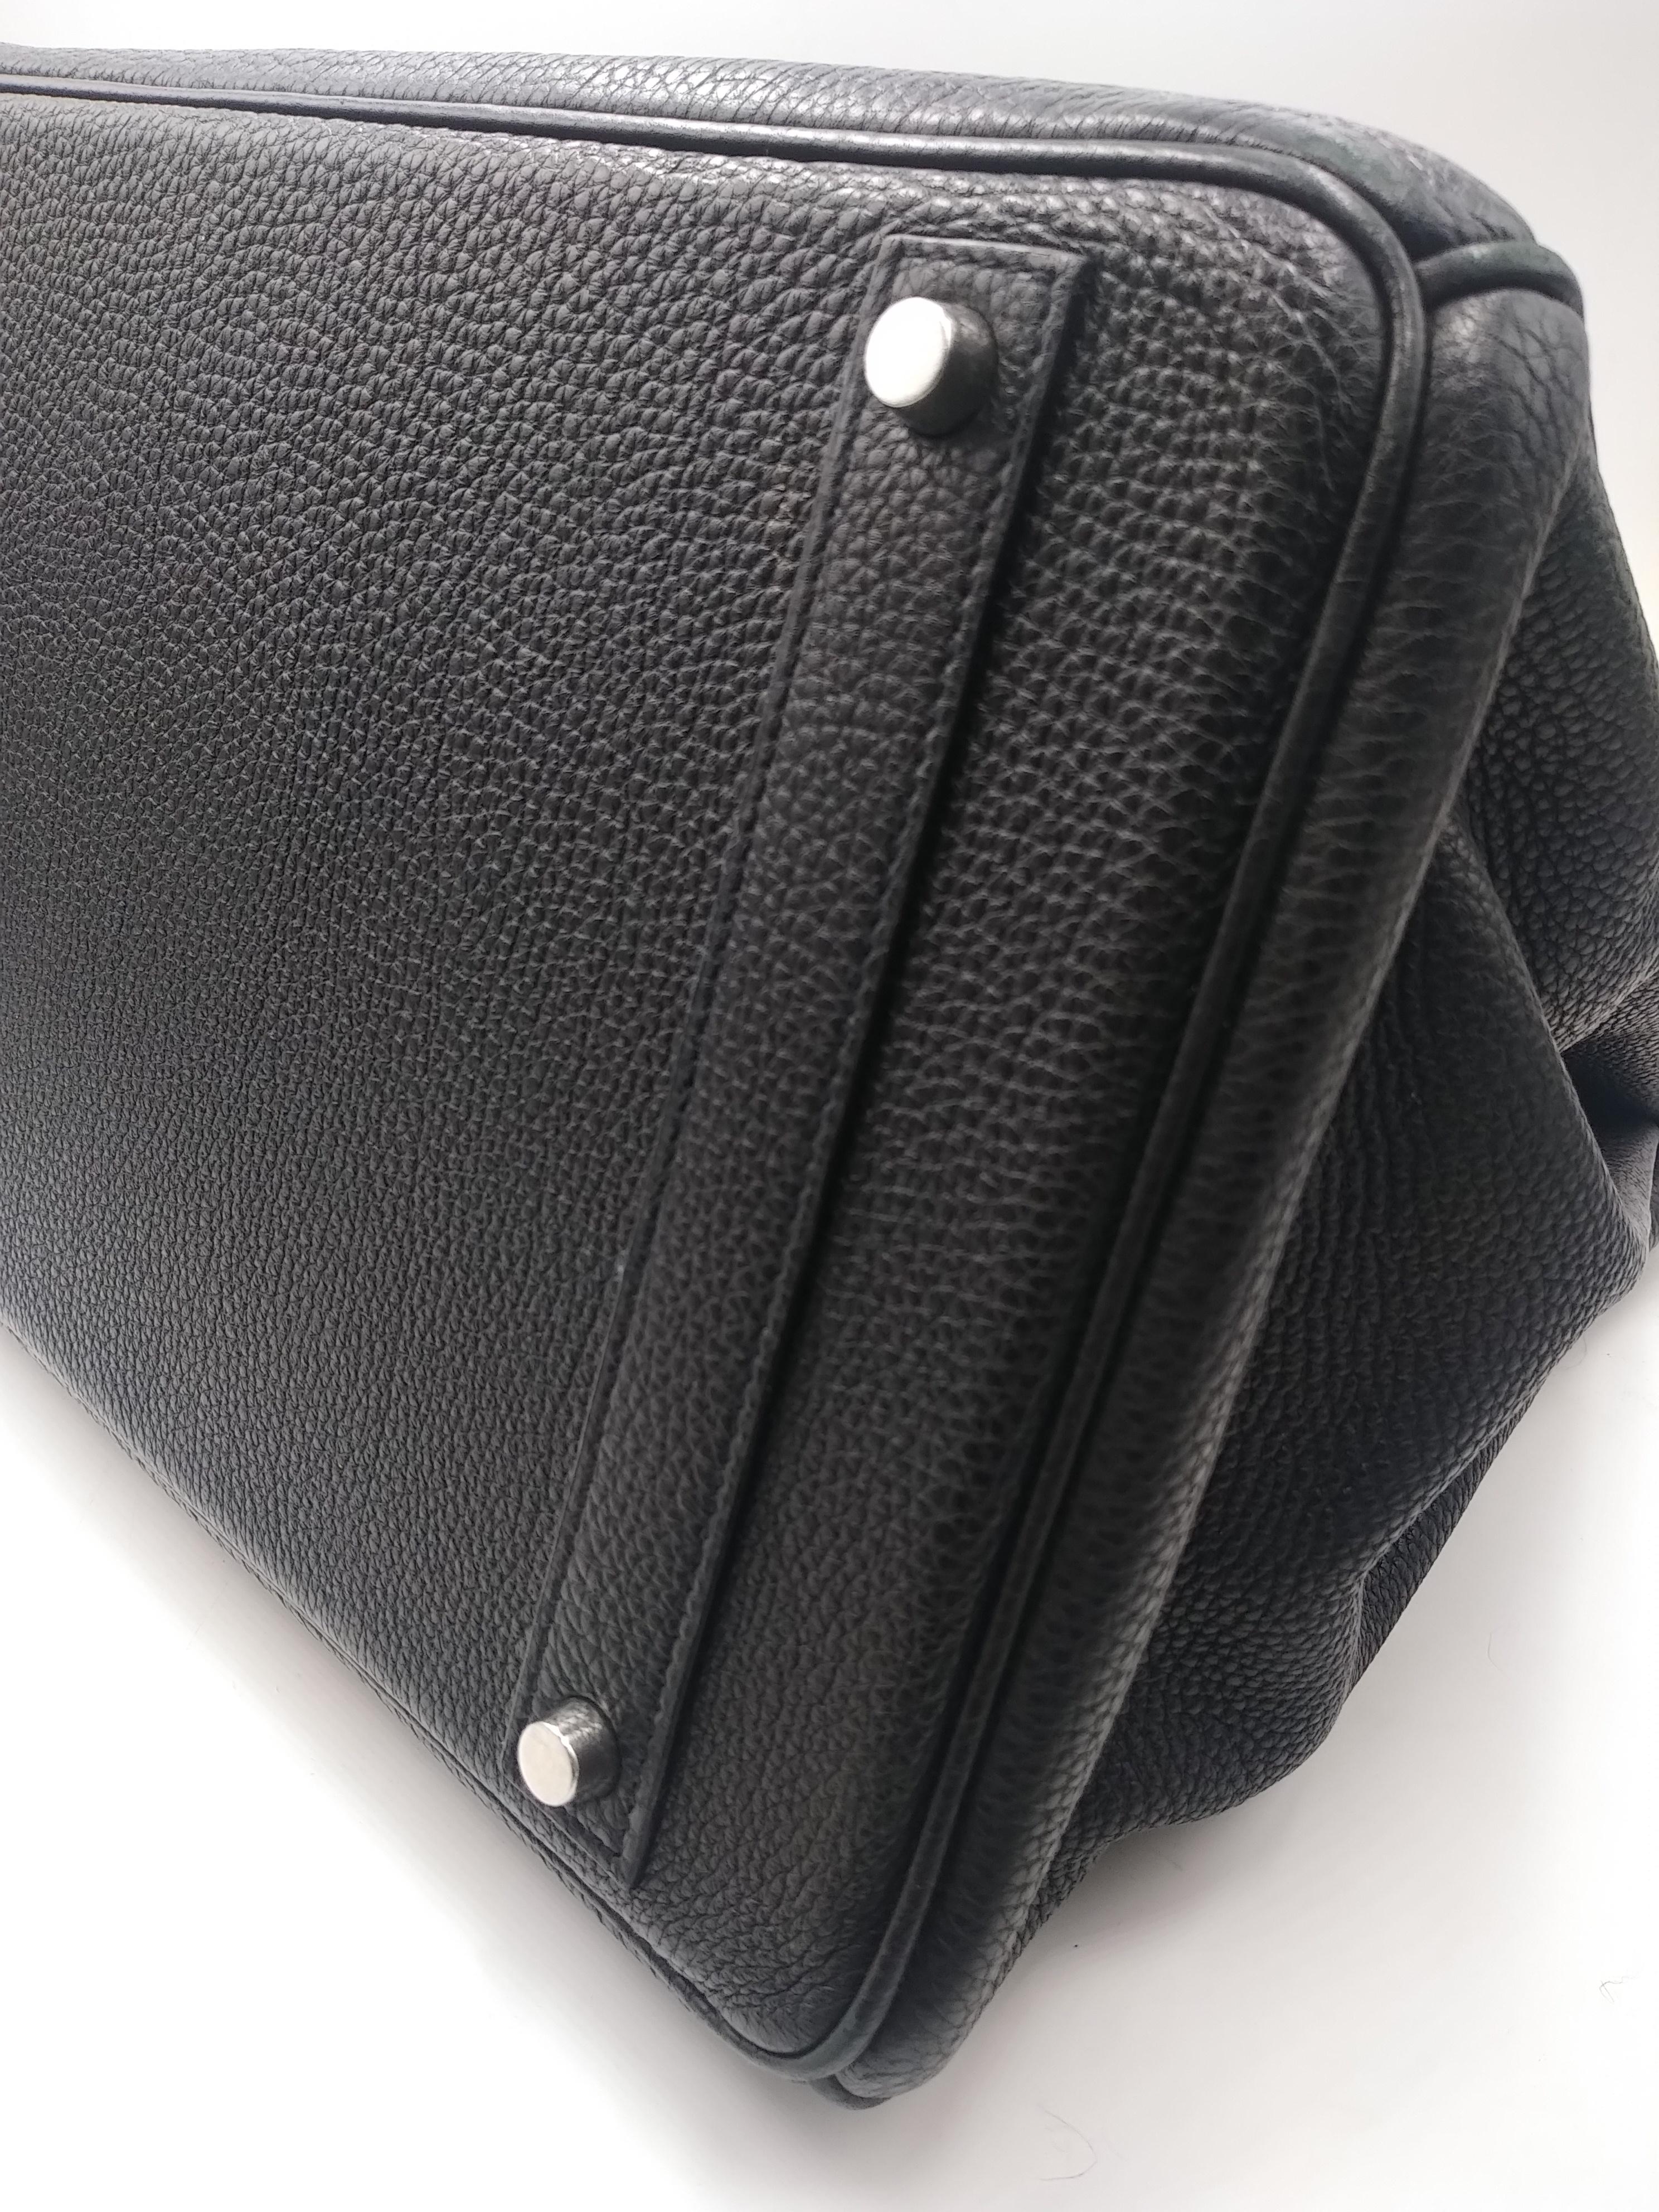 Hermès 40 cm Black Togo Leather Palladium Plated Birkin Bag 5